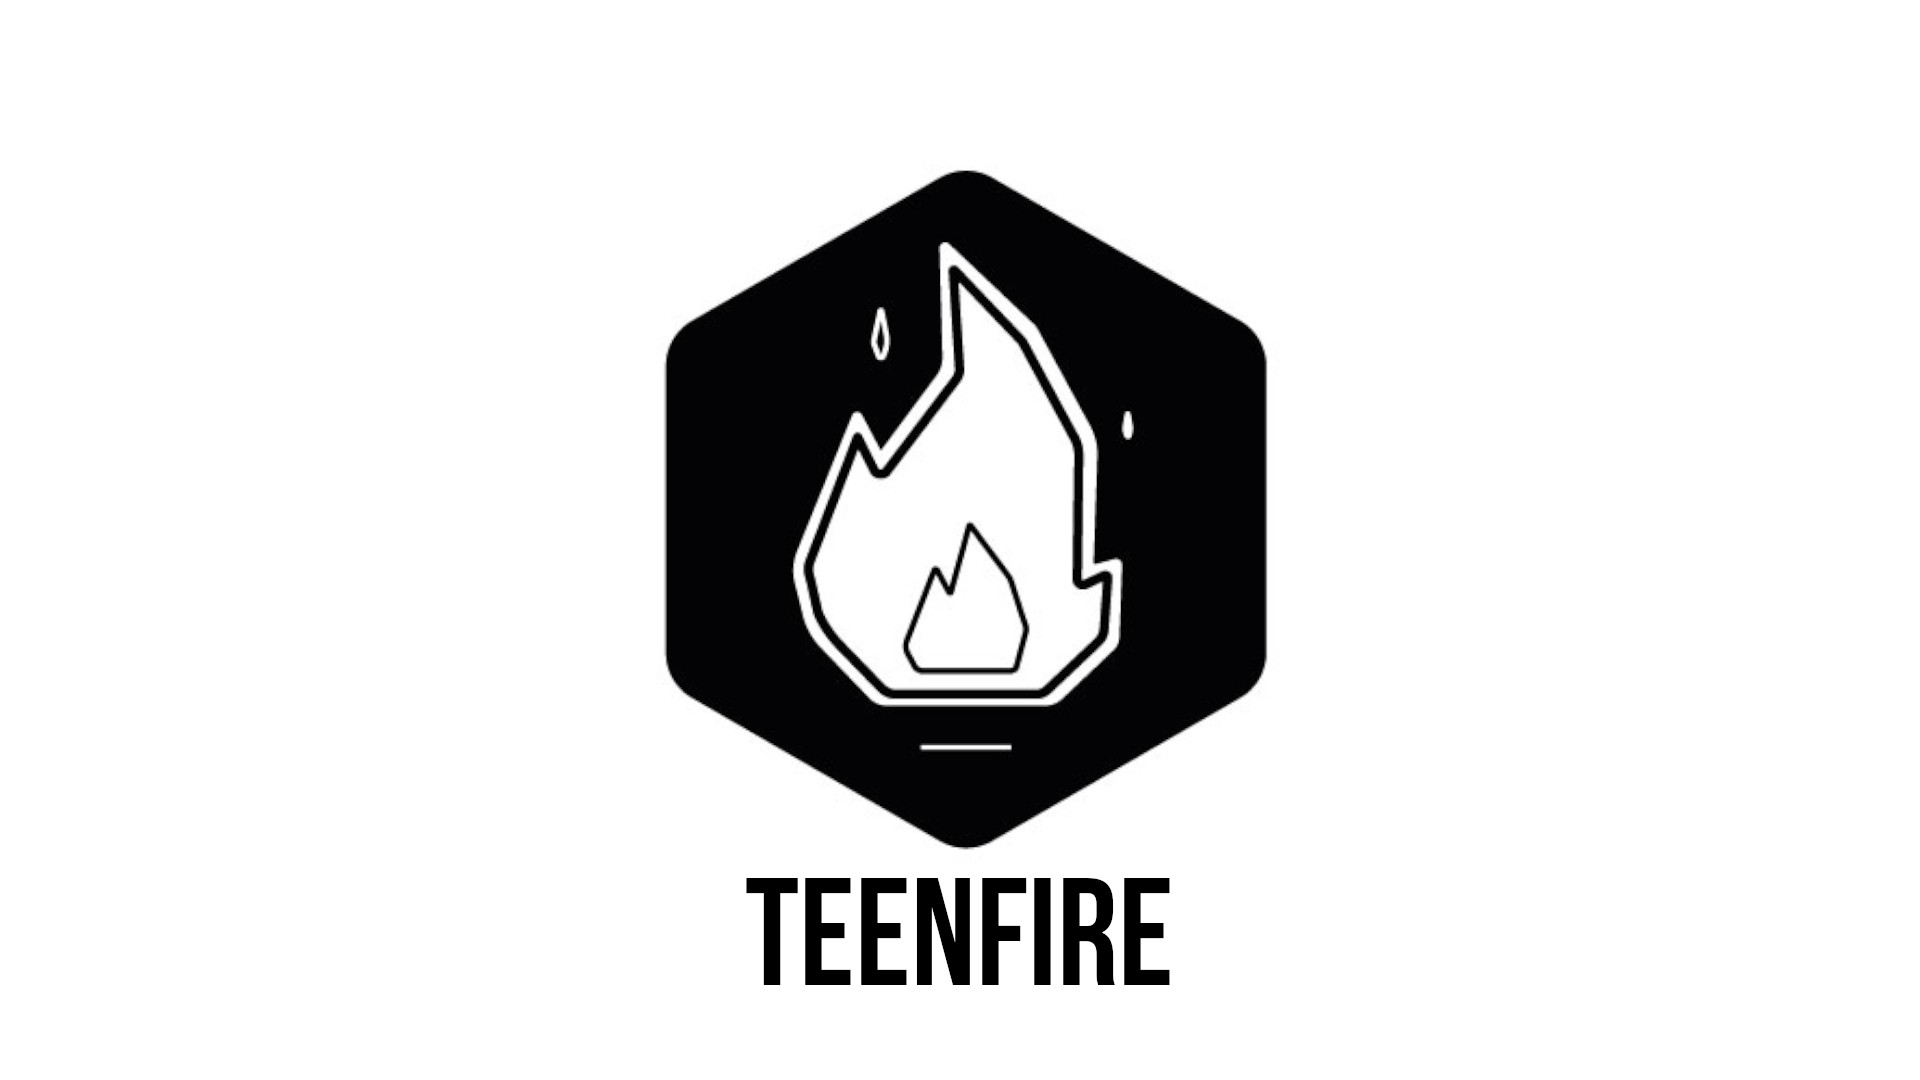 teenfire